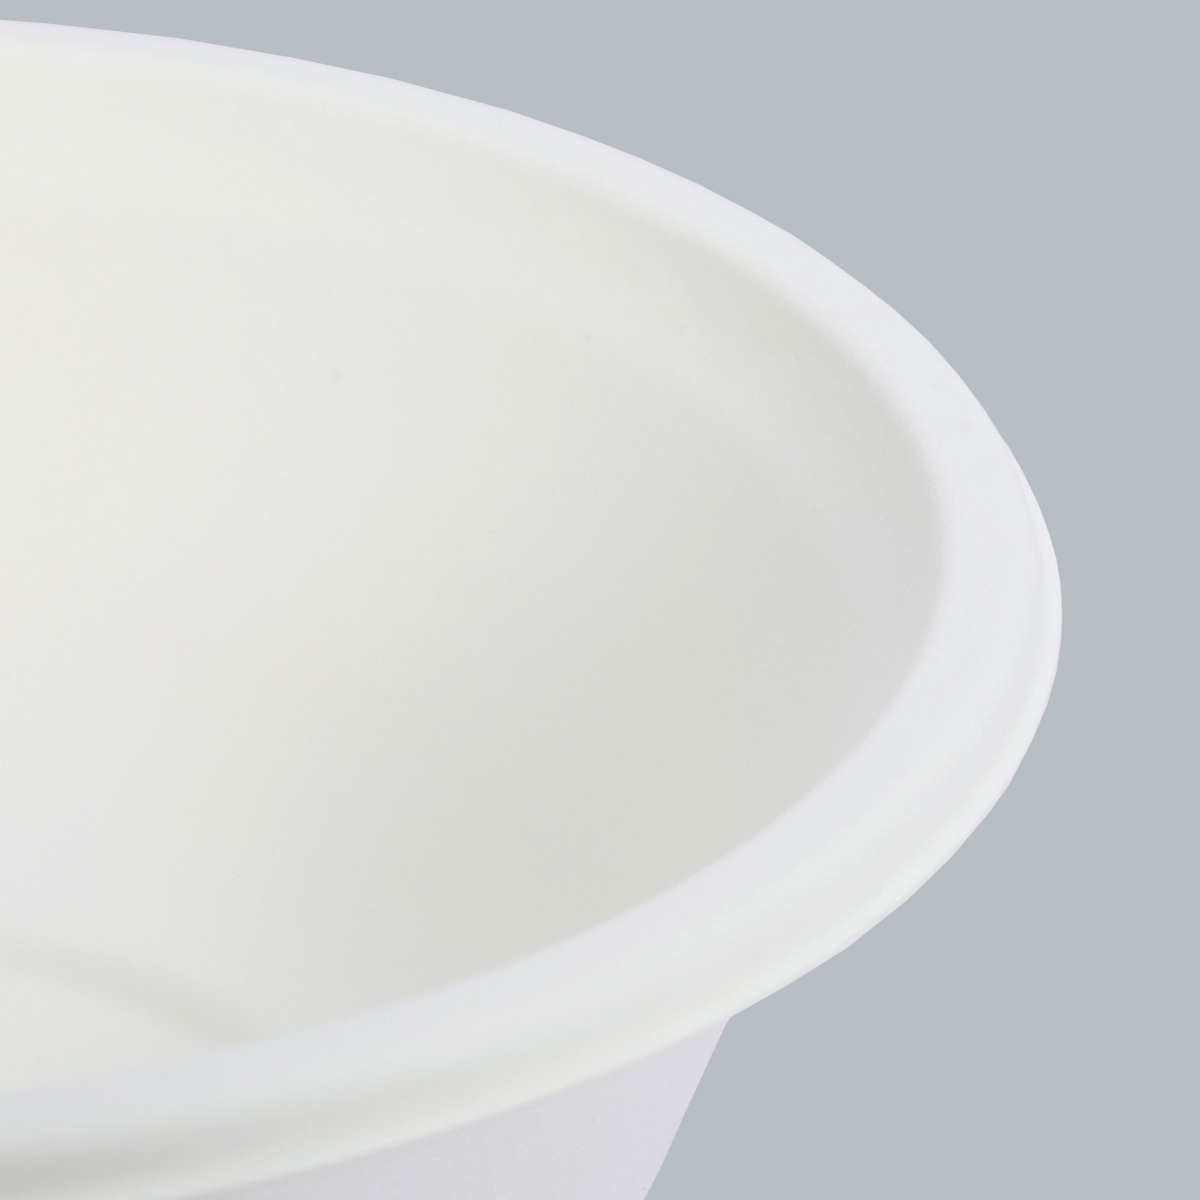 500ml Takeout bowls Customizable bowls environmentally friendly tableware